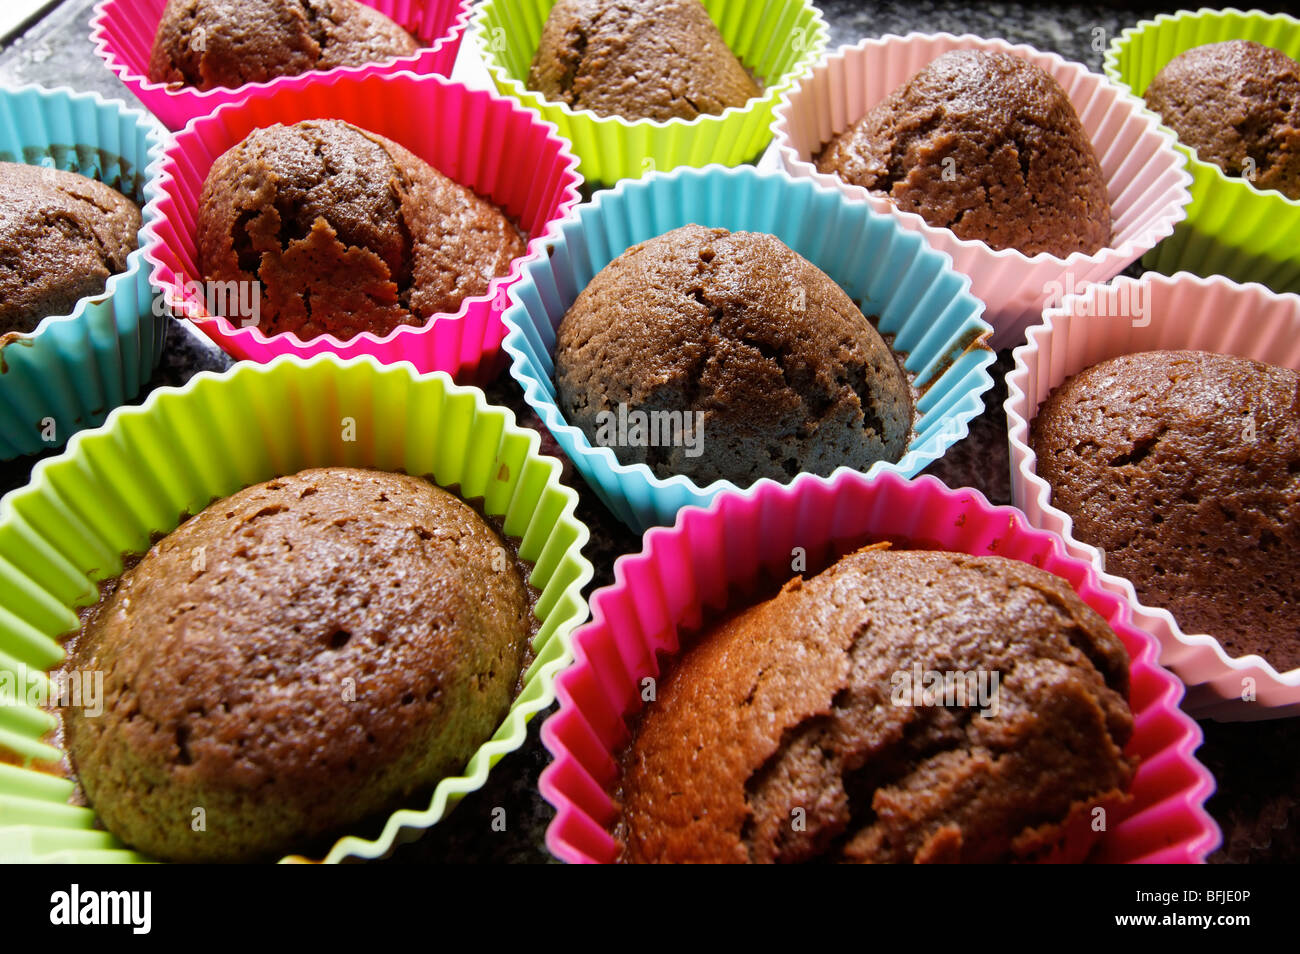 Freshly baked chocolate cupcakes. Stock Photo